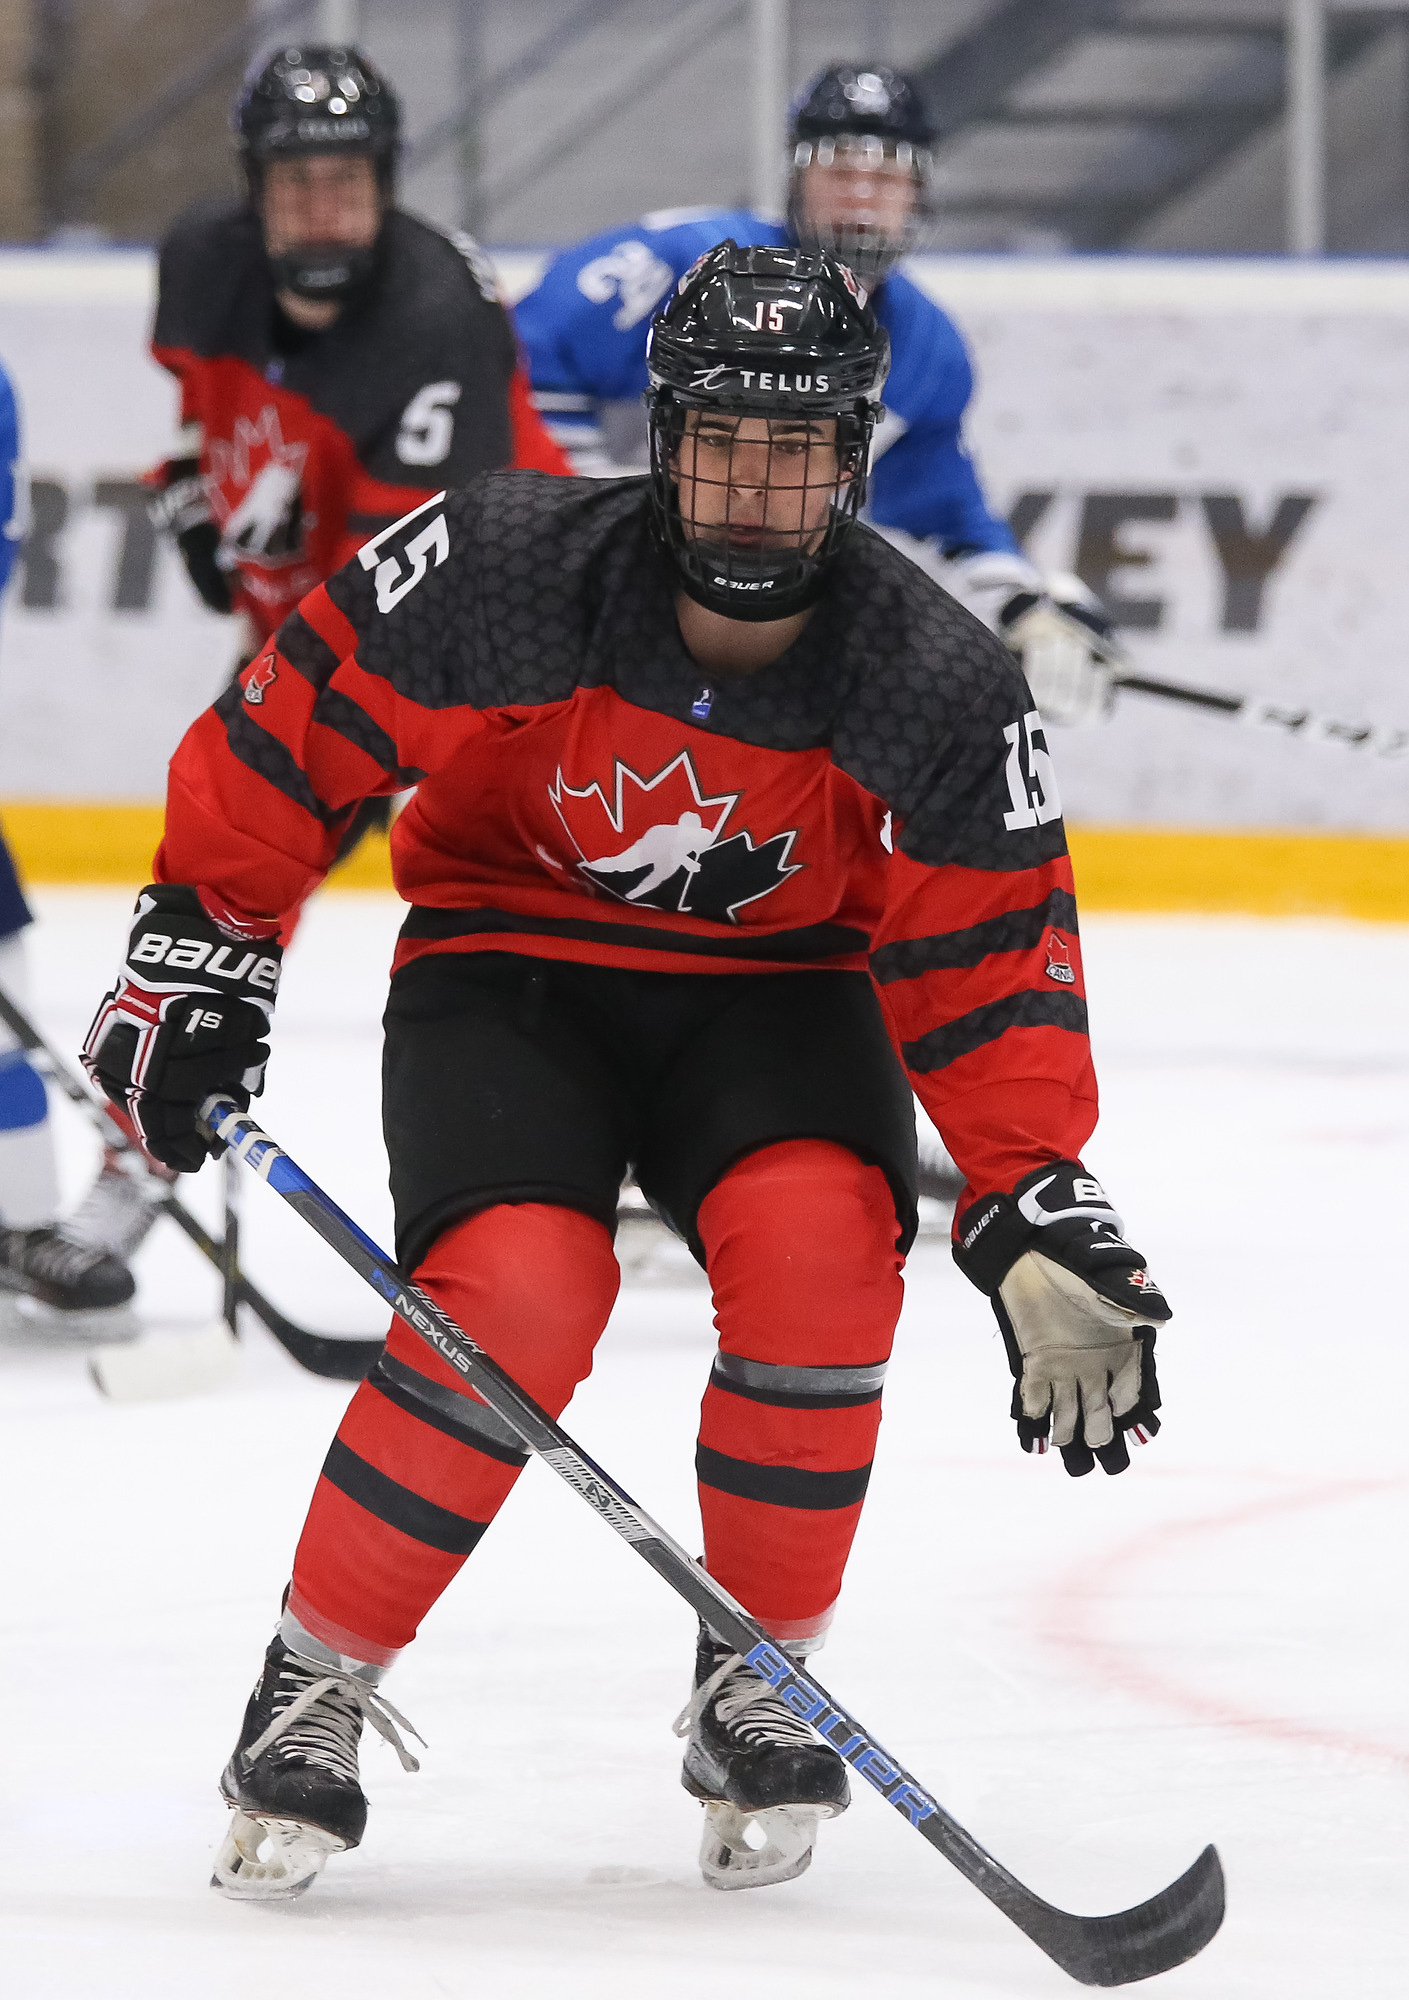 Iihf Gallery Canada Vs Finland 19 Iihf Ice Hockey U18 World Championship